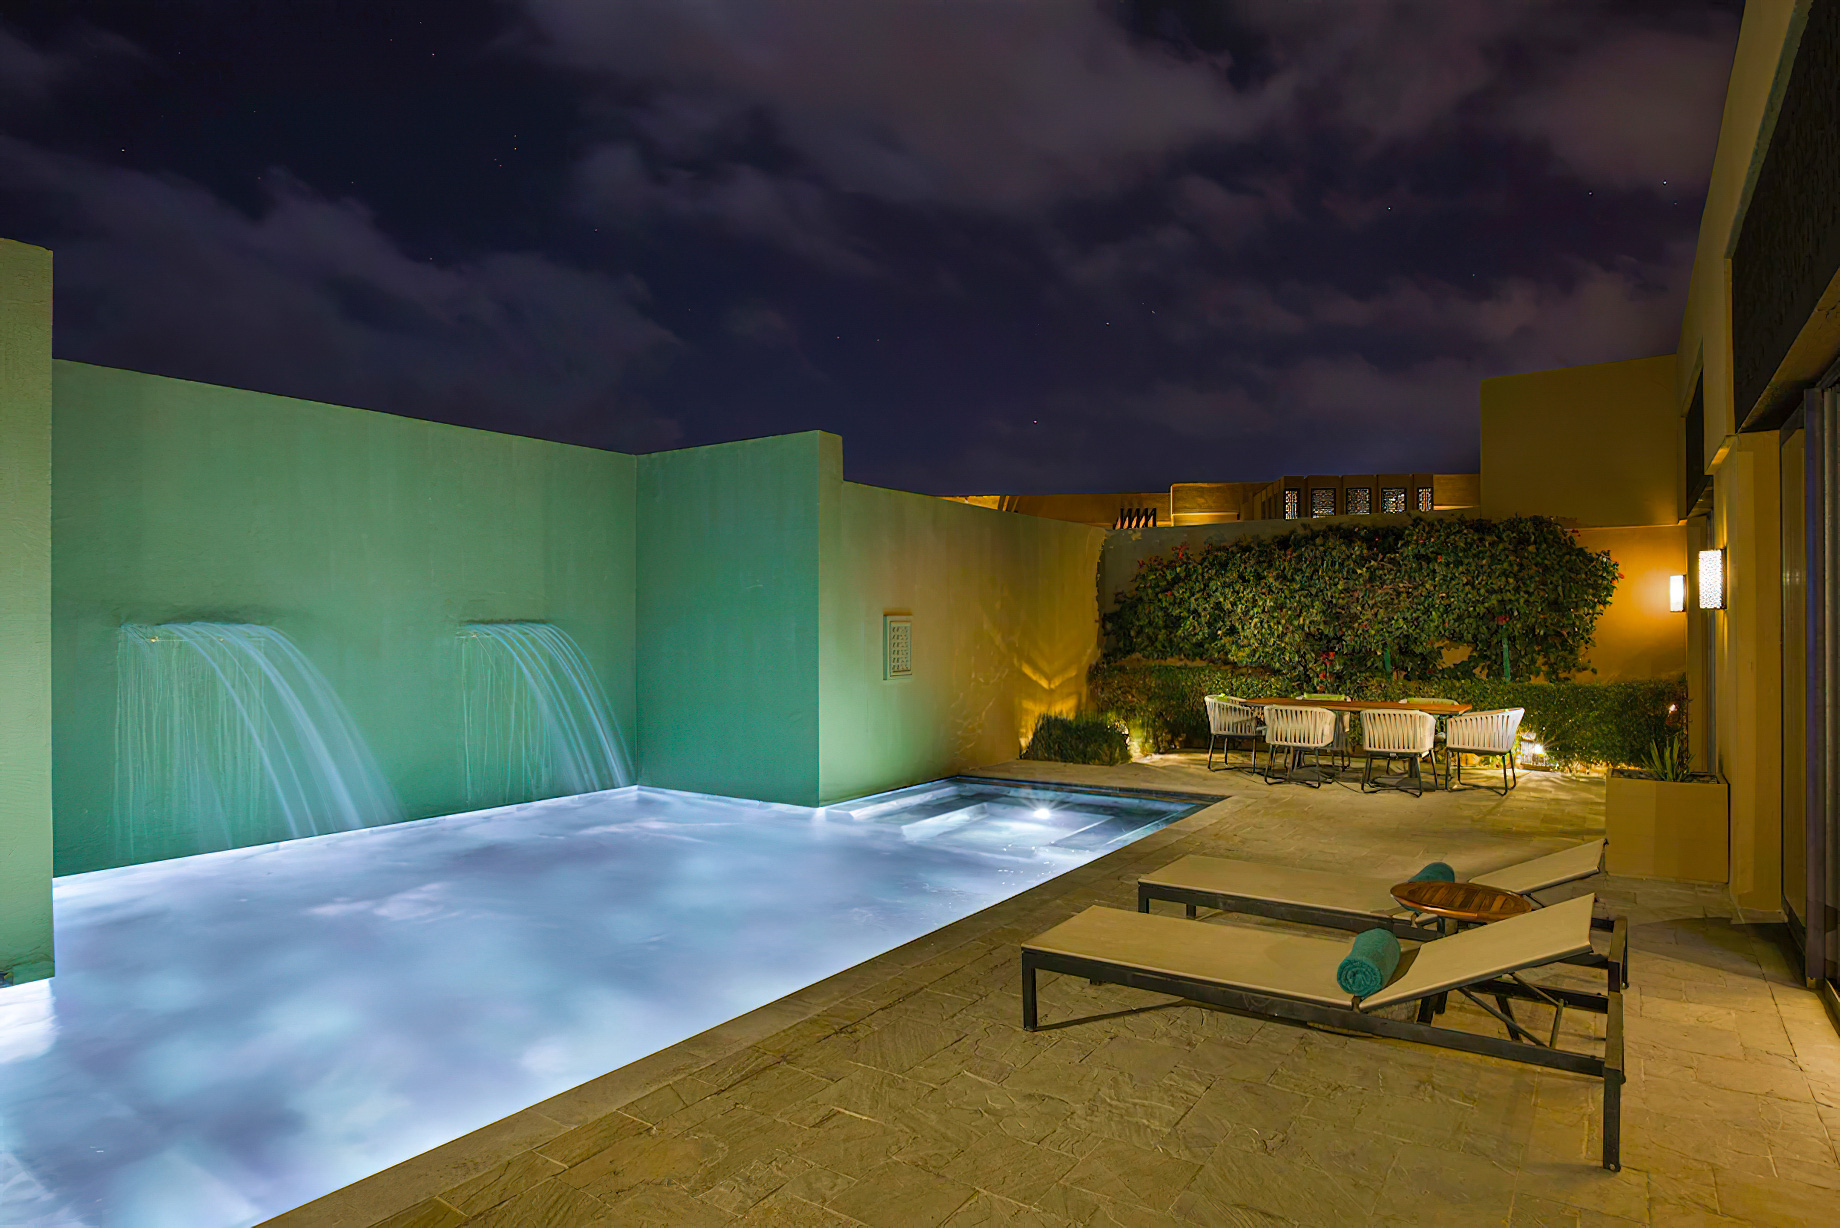 Anantara Al Jabal Al Akhdar Resort - Oman - Two Bedroom Garden Pool Villa Deck